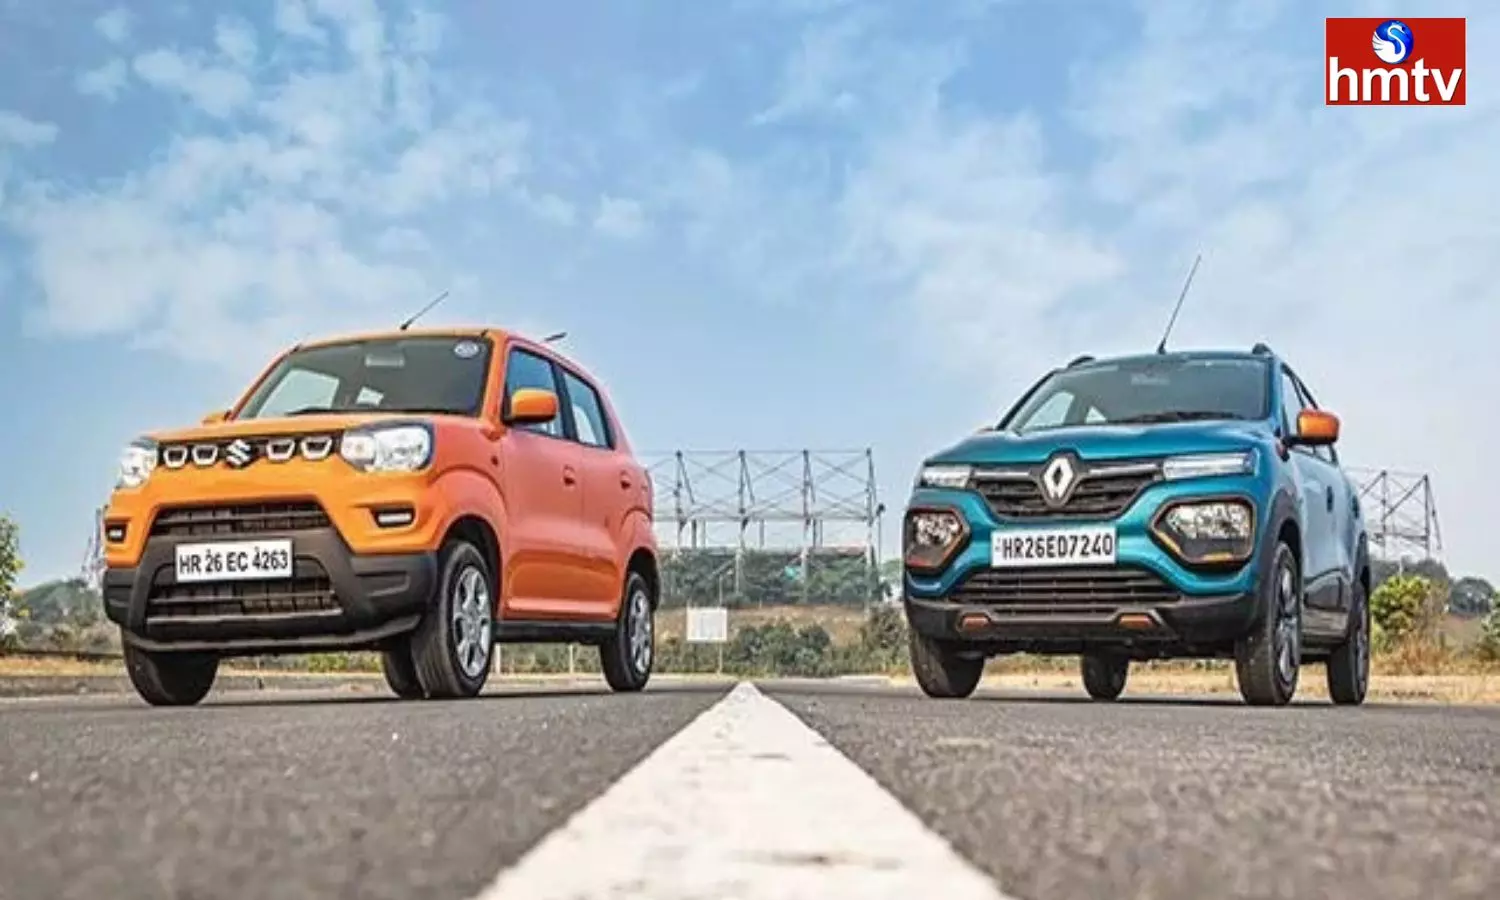 Renault kwid and Maruti Suzuki alto s presso under 5 lakh rupees with 25 kilometer mileage